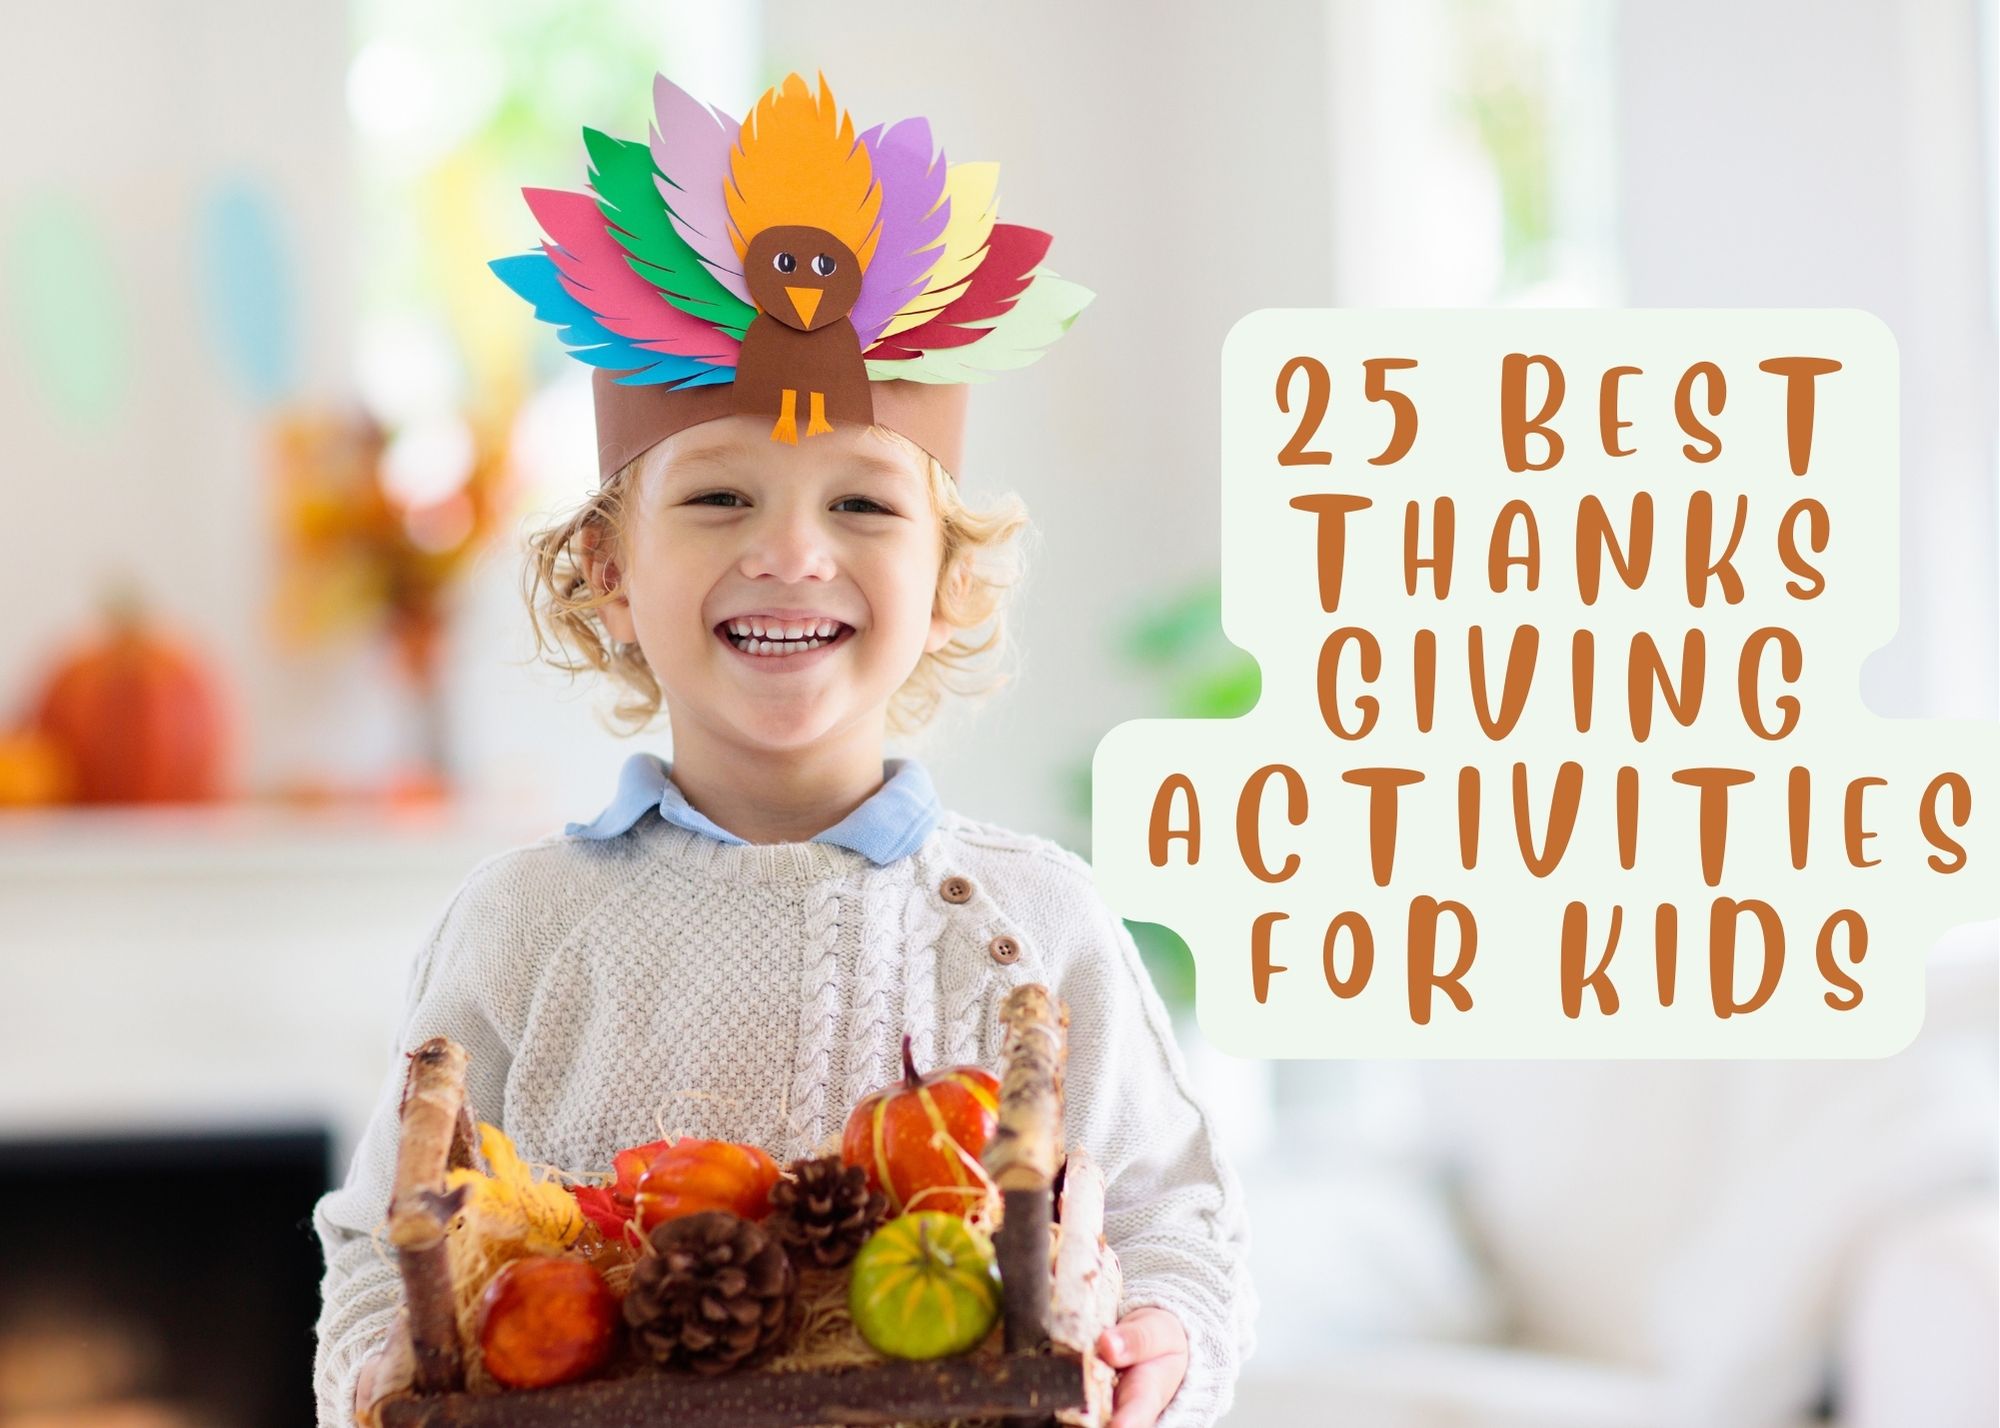 25 Best Thanksgiving Activities for Kids